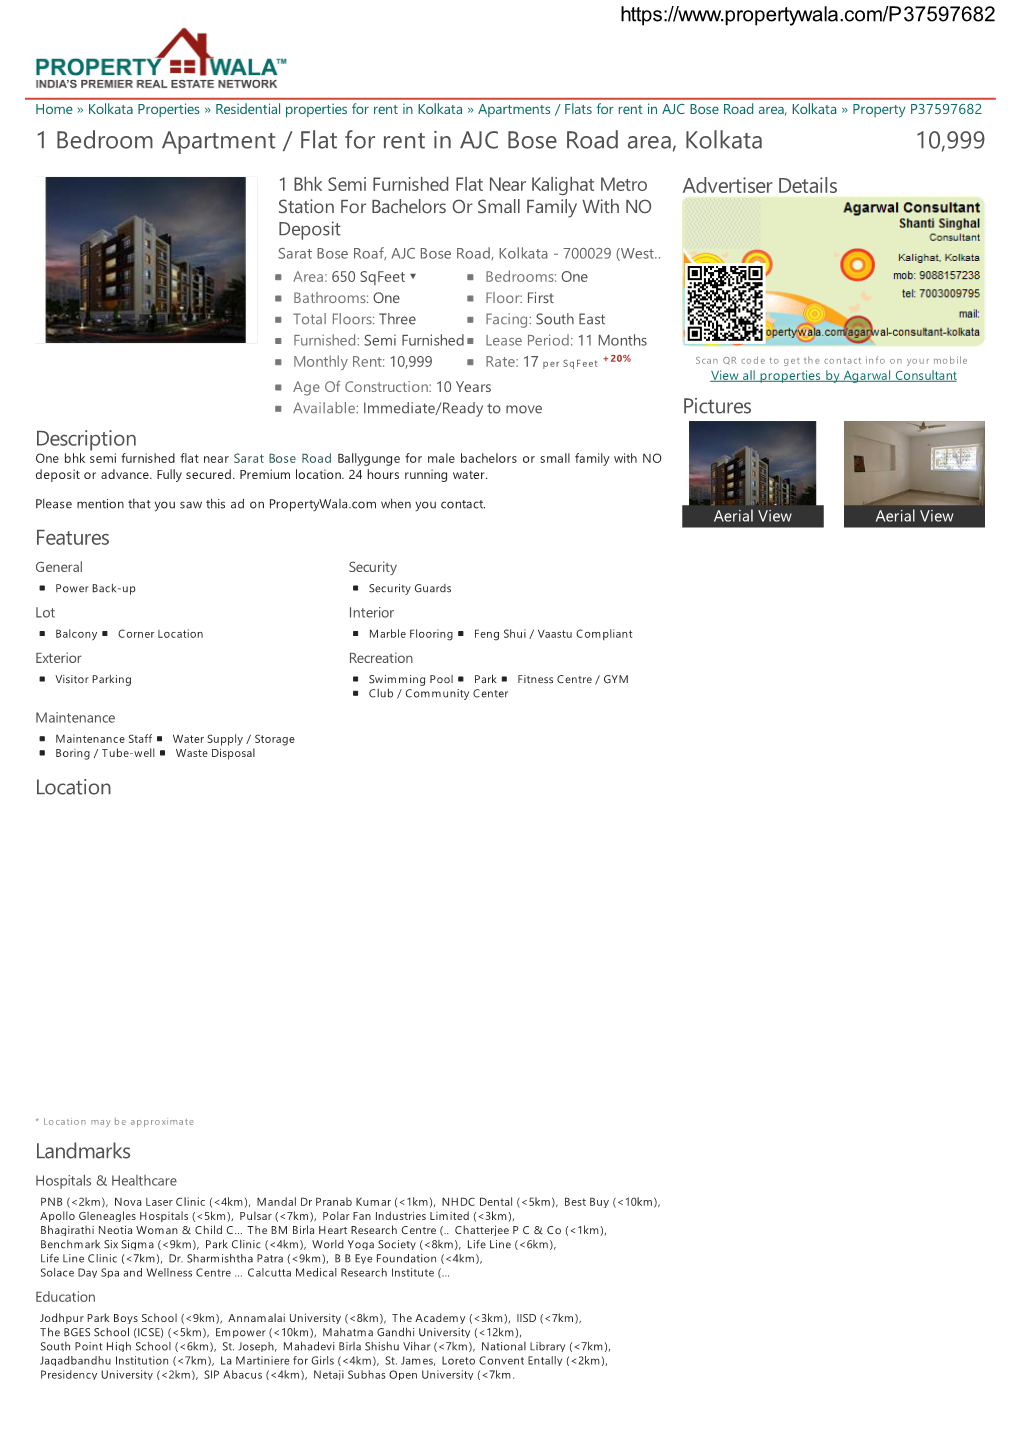 1 Bedroom Apartment / Flat for Rent in AJC Bose Road Area, Kolkata (P37597682)